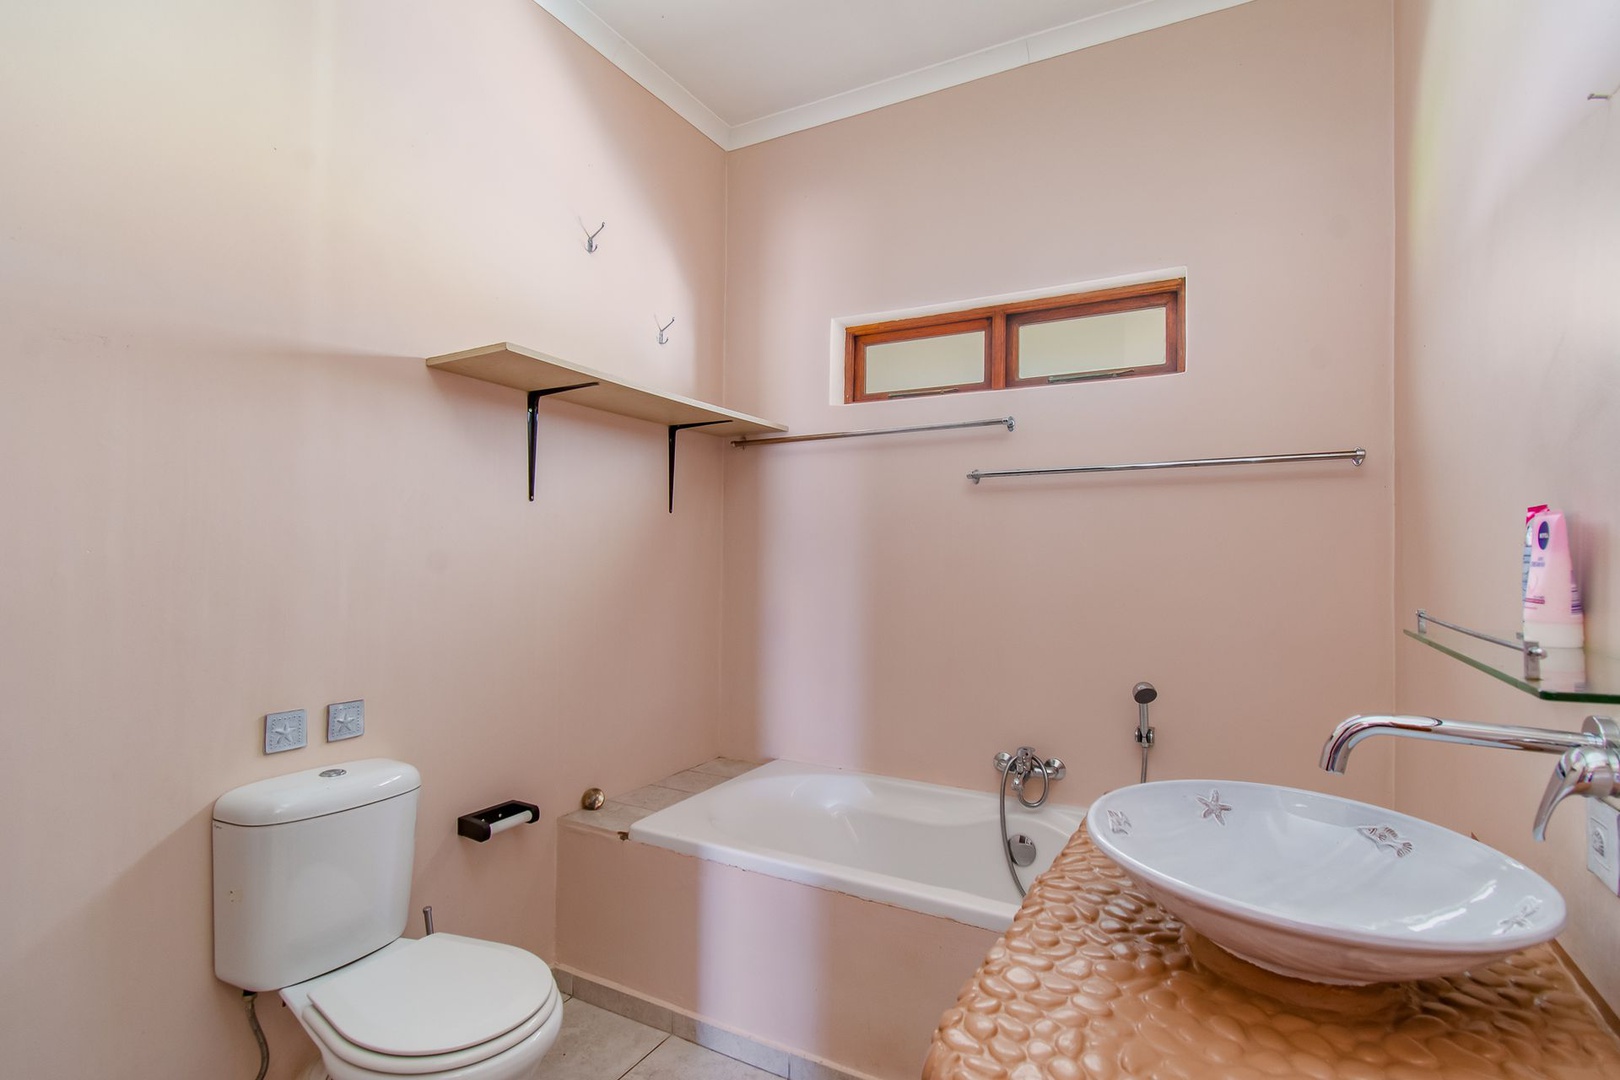 House in Pringle Bay Rural - Management suite: bedroom 2 & 3 sharing a bathroom